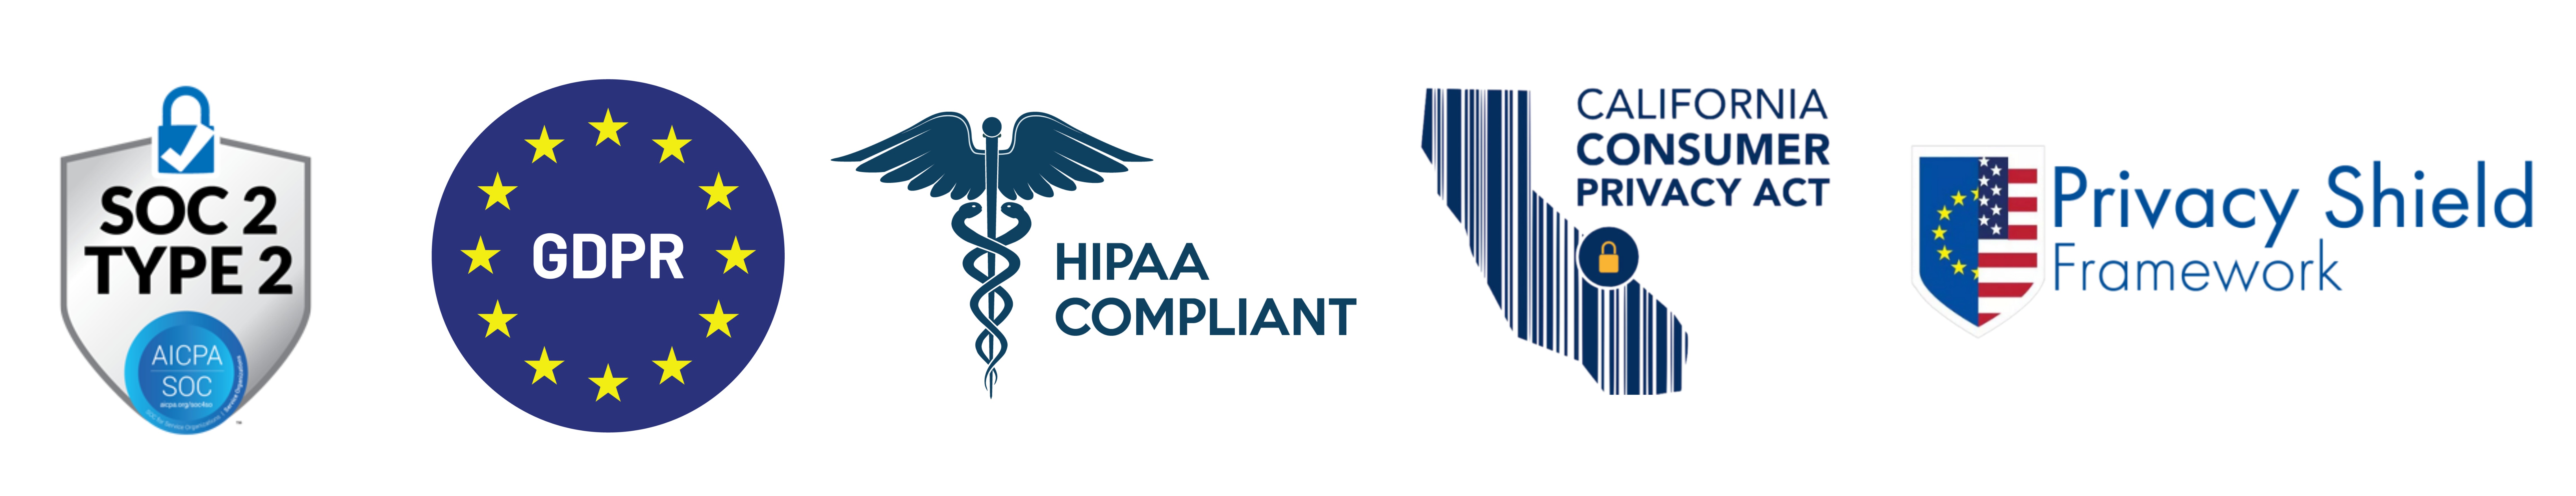 SOC 2 Type 2, HIPAA, GDPR, CCPA, and Privacy Shield logos